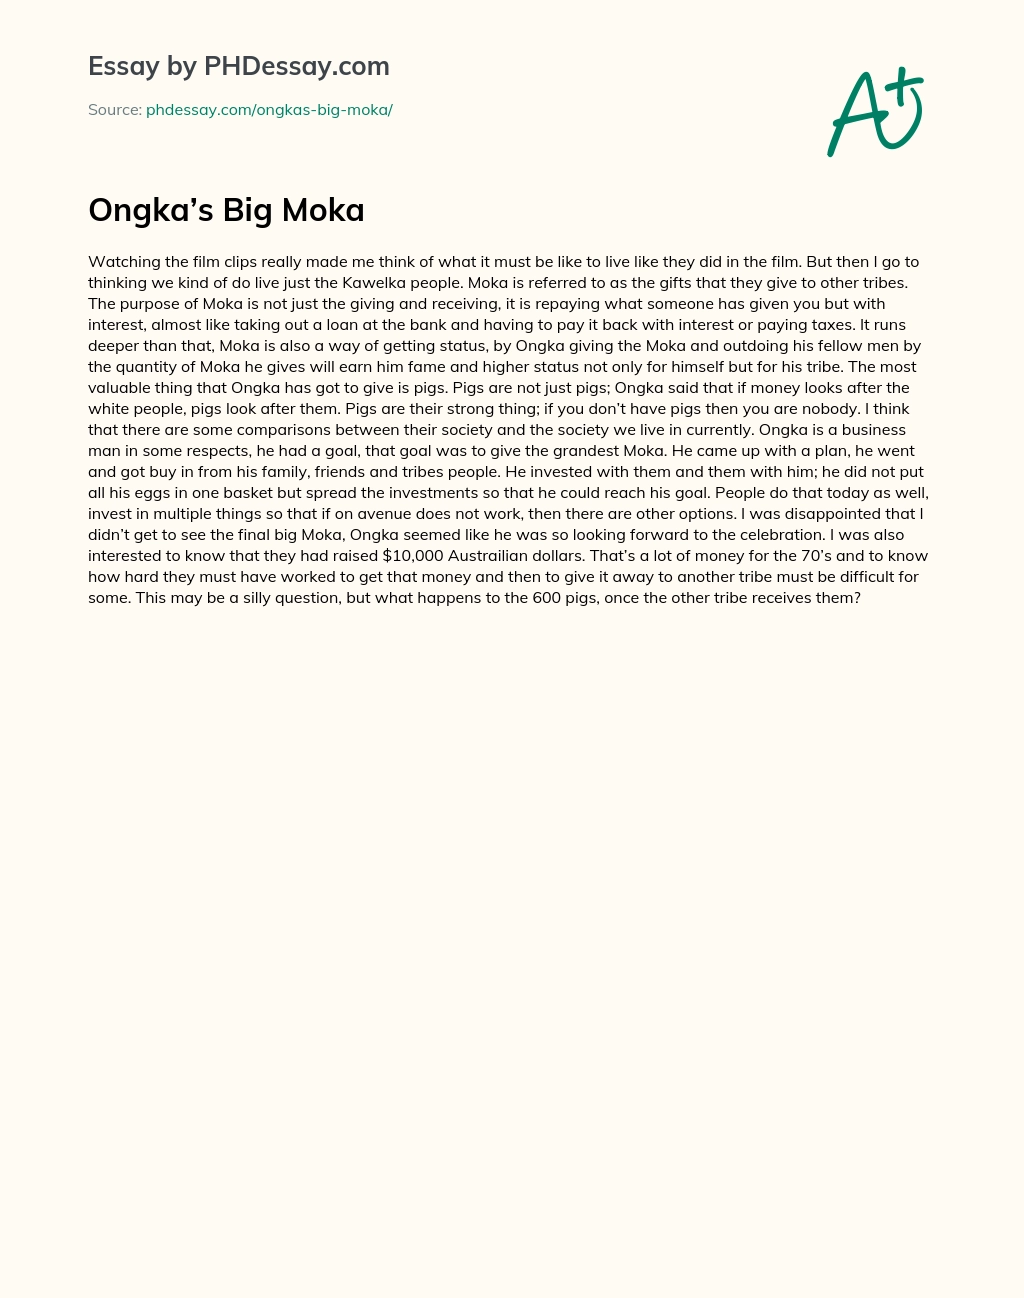 Ongka’s Big Moka essay